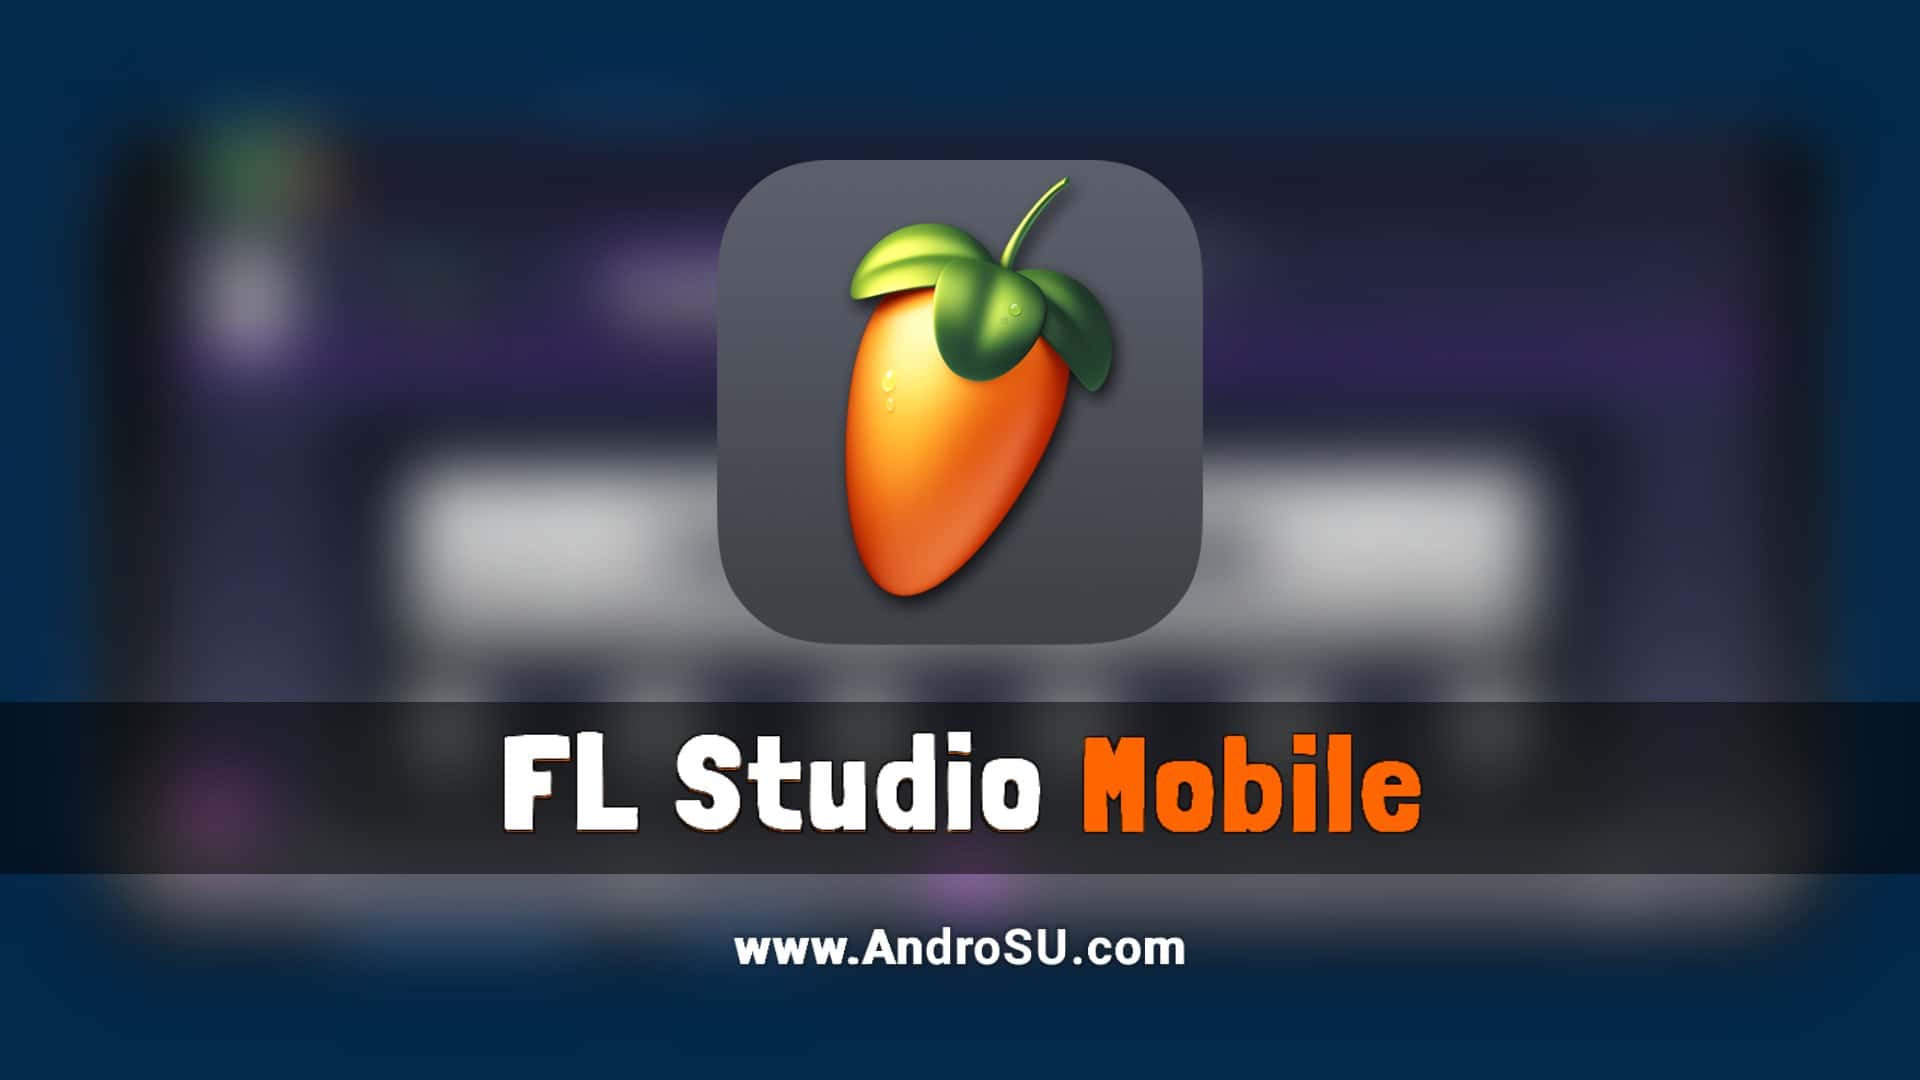 FL Studio Mobile APK, FL Studio Mobile Android, FL Studio Mobile Free Download